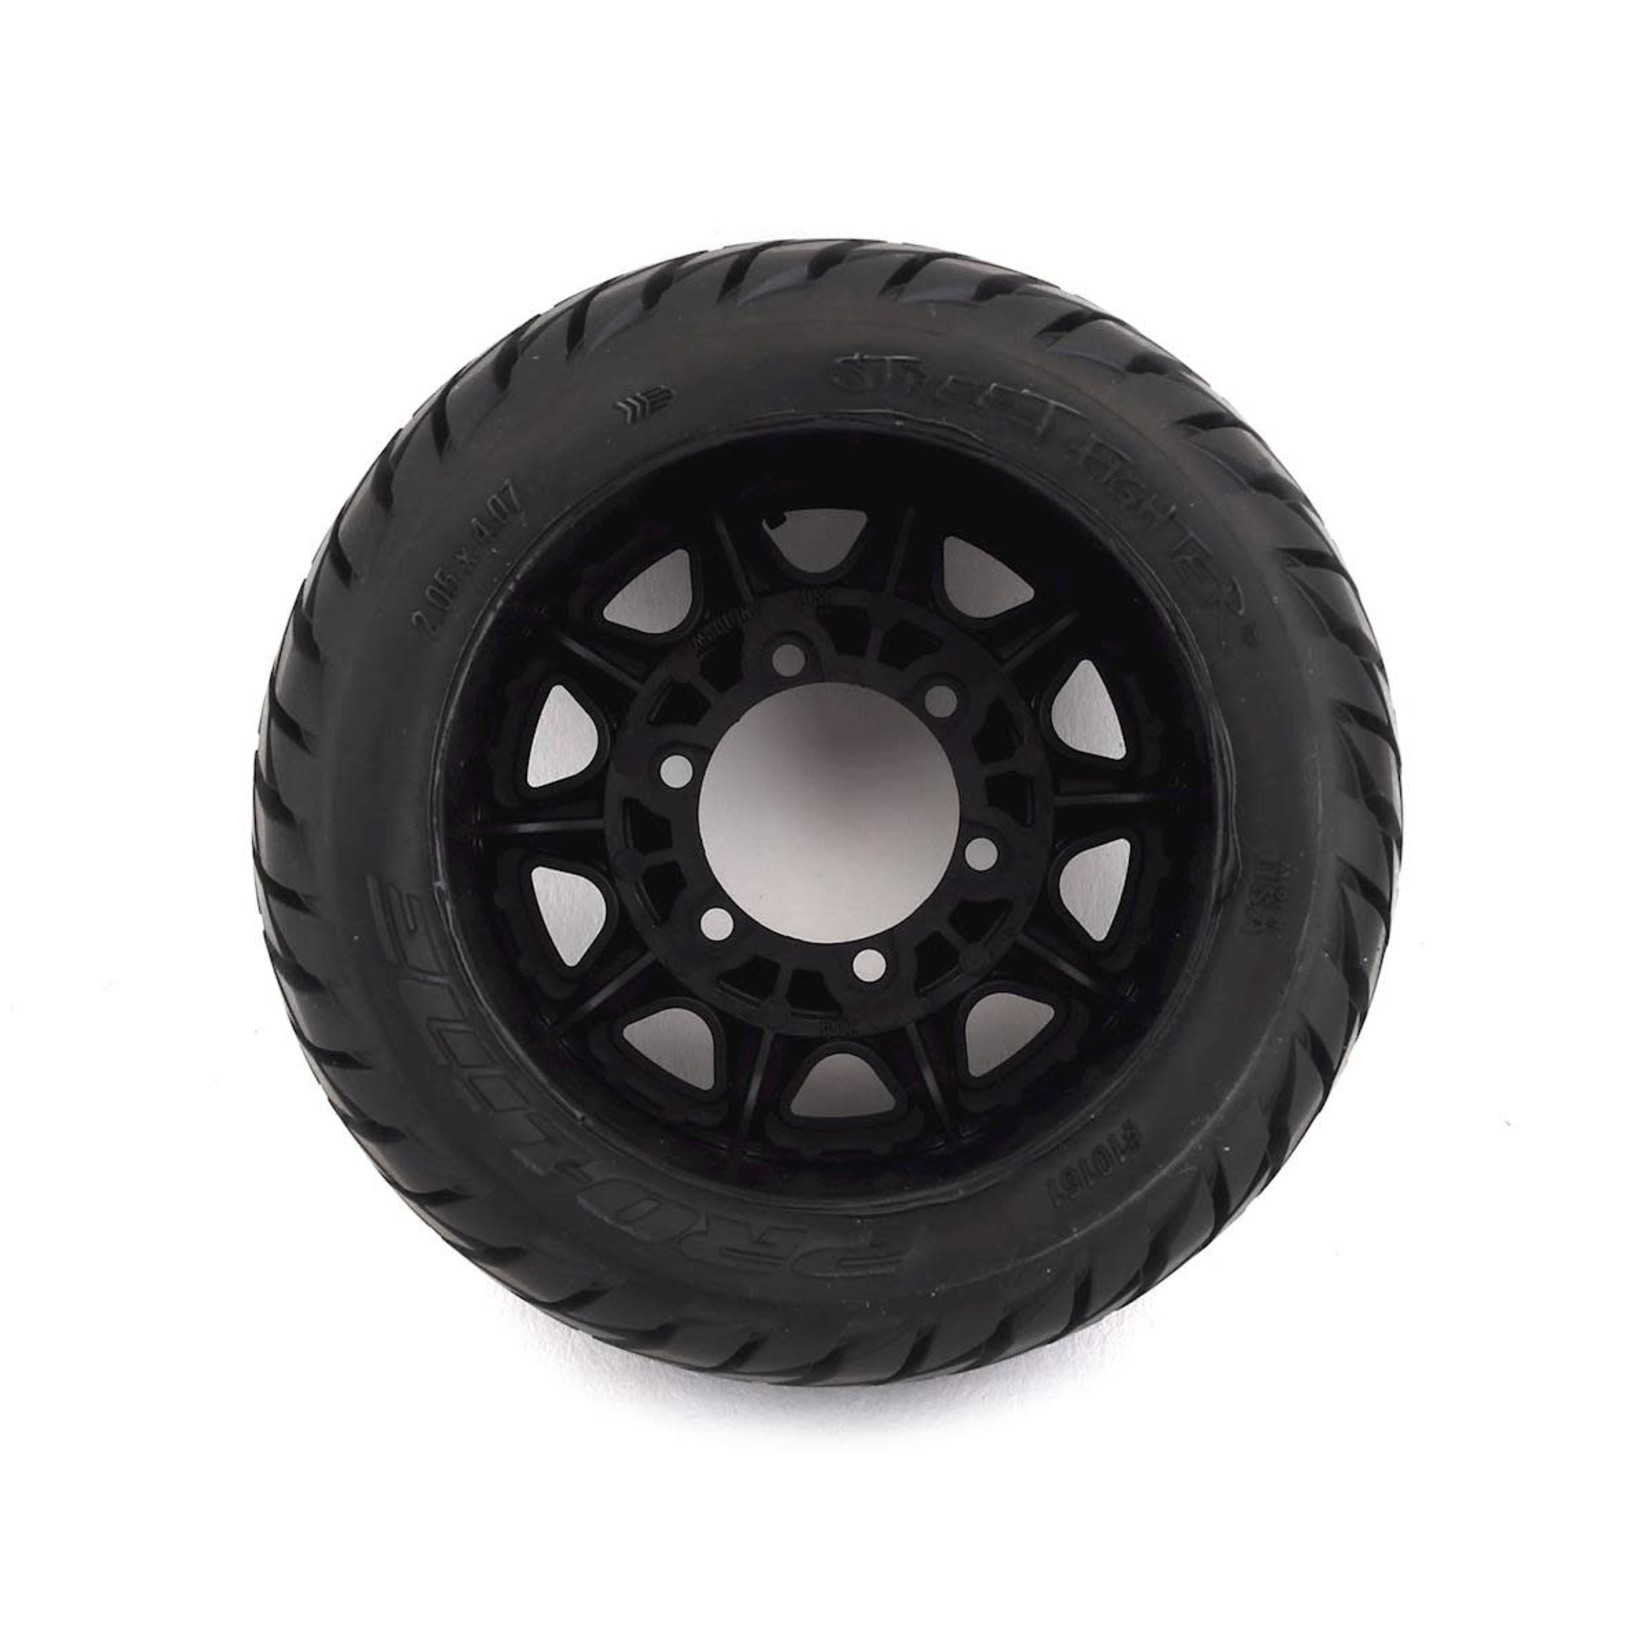 Pro-Line Pro-Line Street Fighter LP 2.8" Tires w/Raid Rear Wheels (2) (Black) (M2) w/12mm Removable Hex #10161-10